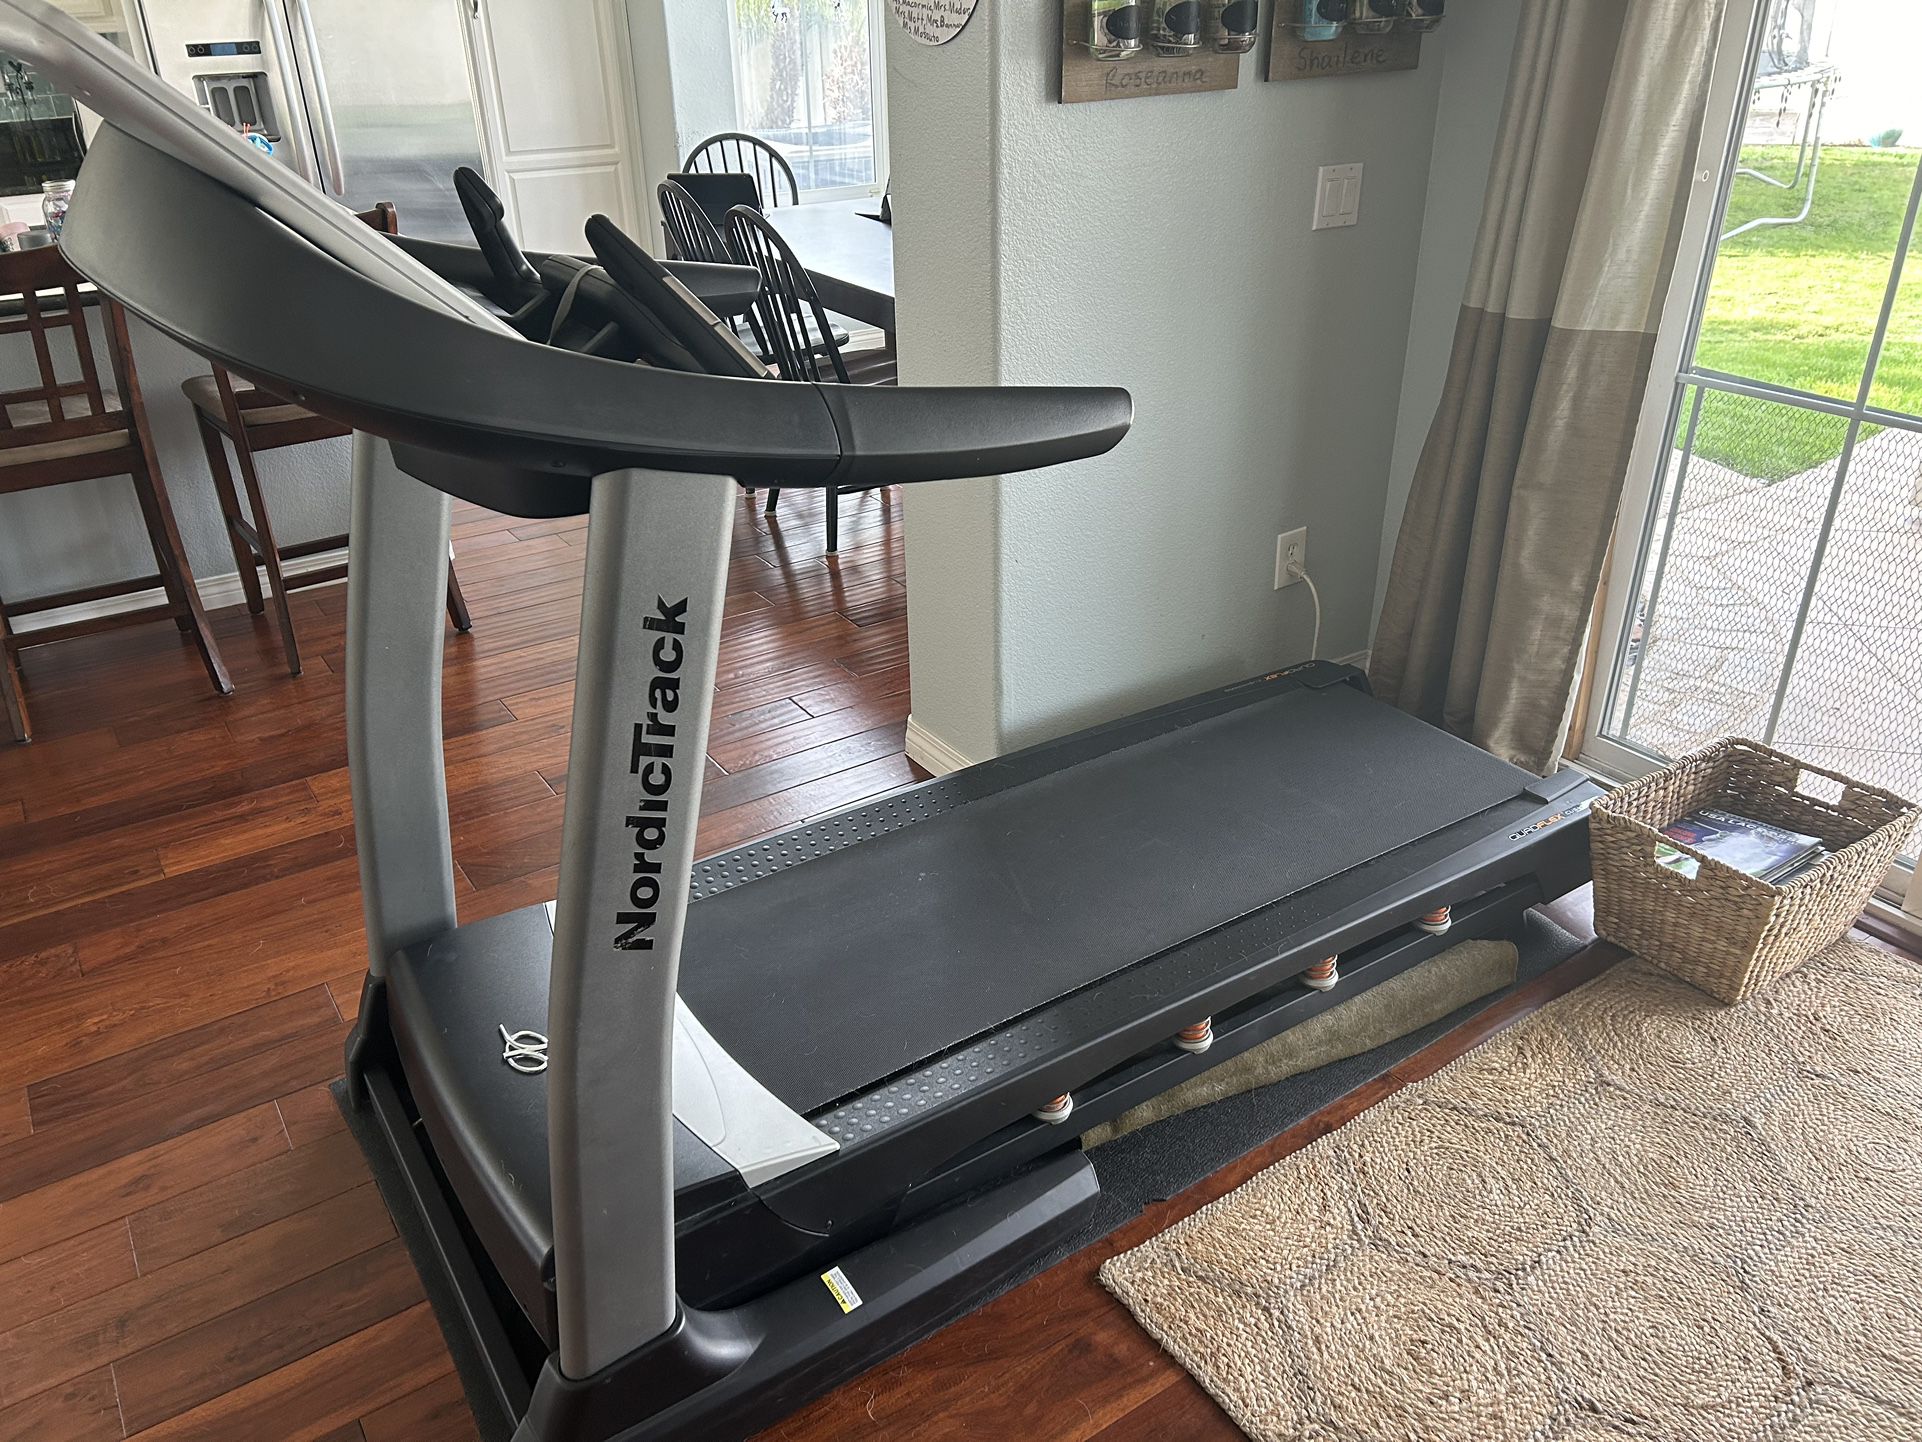 NordicTrack c900 Pro treadmill